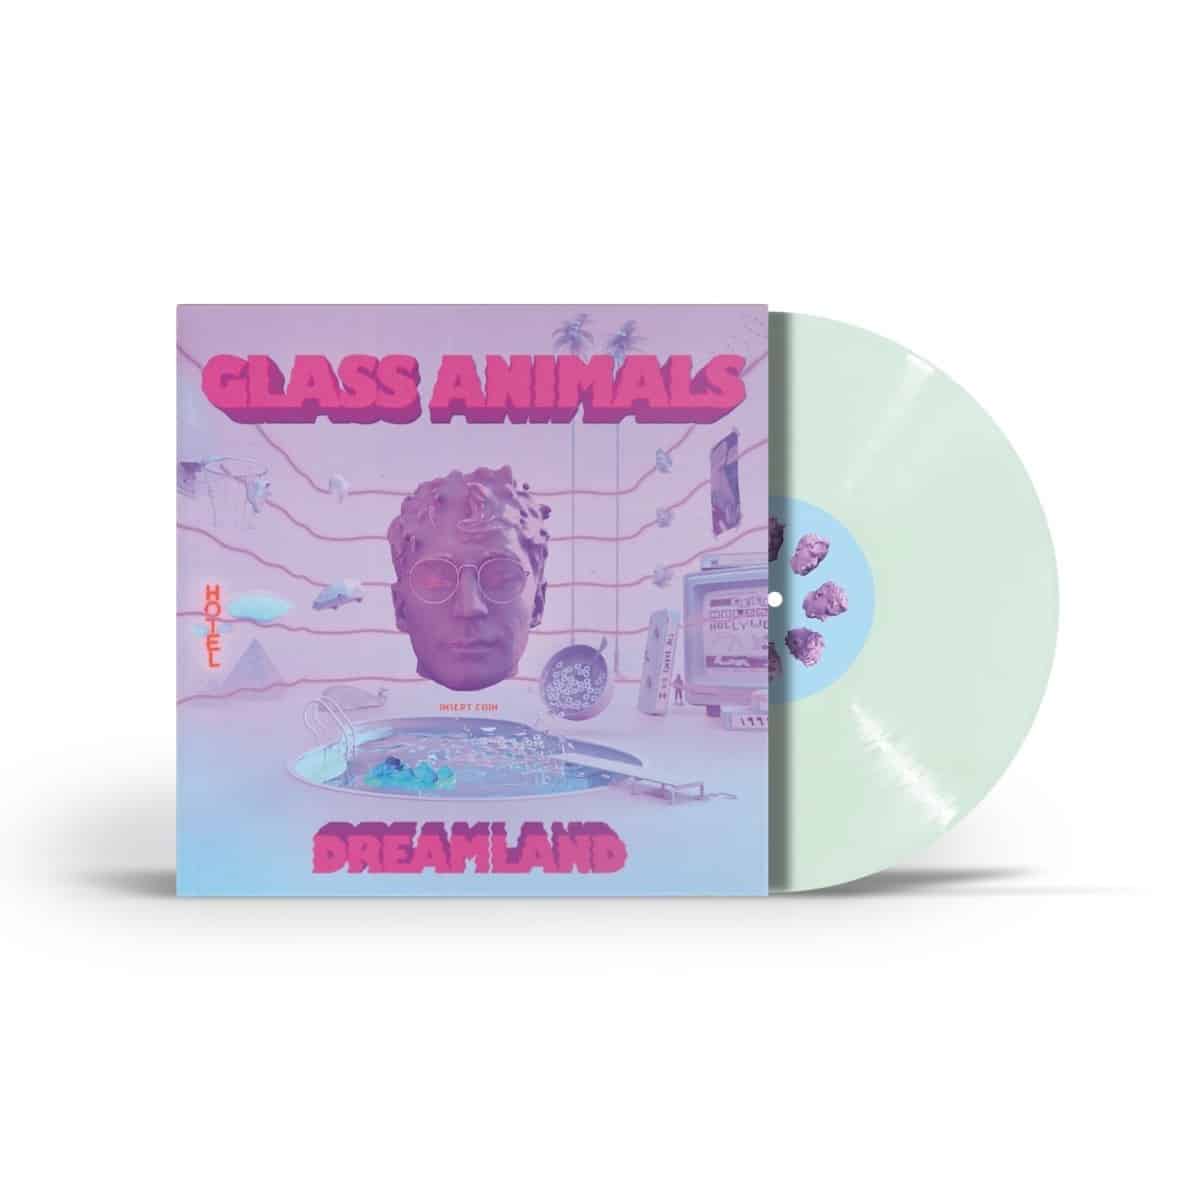 Glass Animals | Dreamland [Explicit Content] (180 Gram Translucent Green Vinyl) | Vinyl